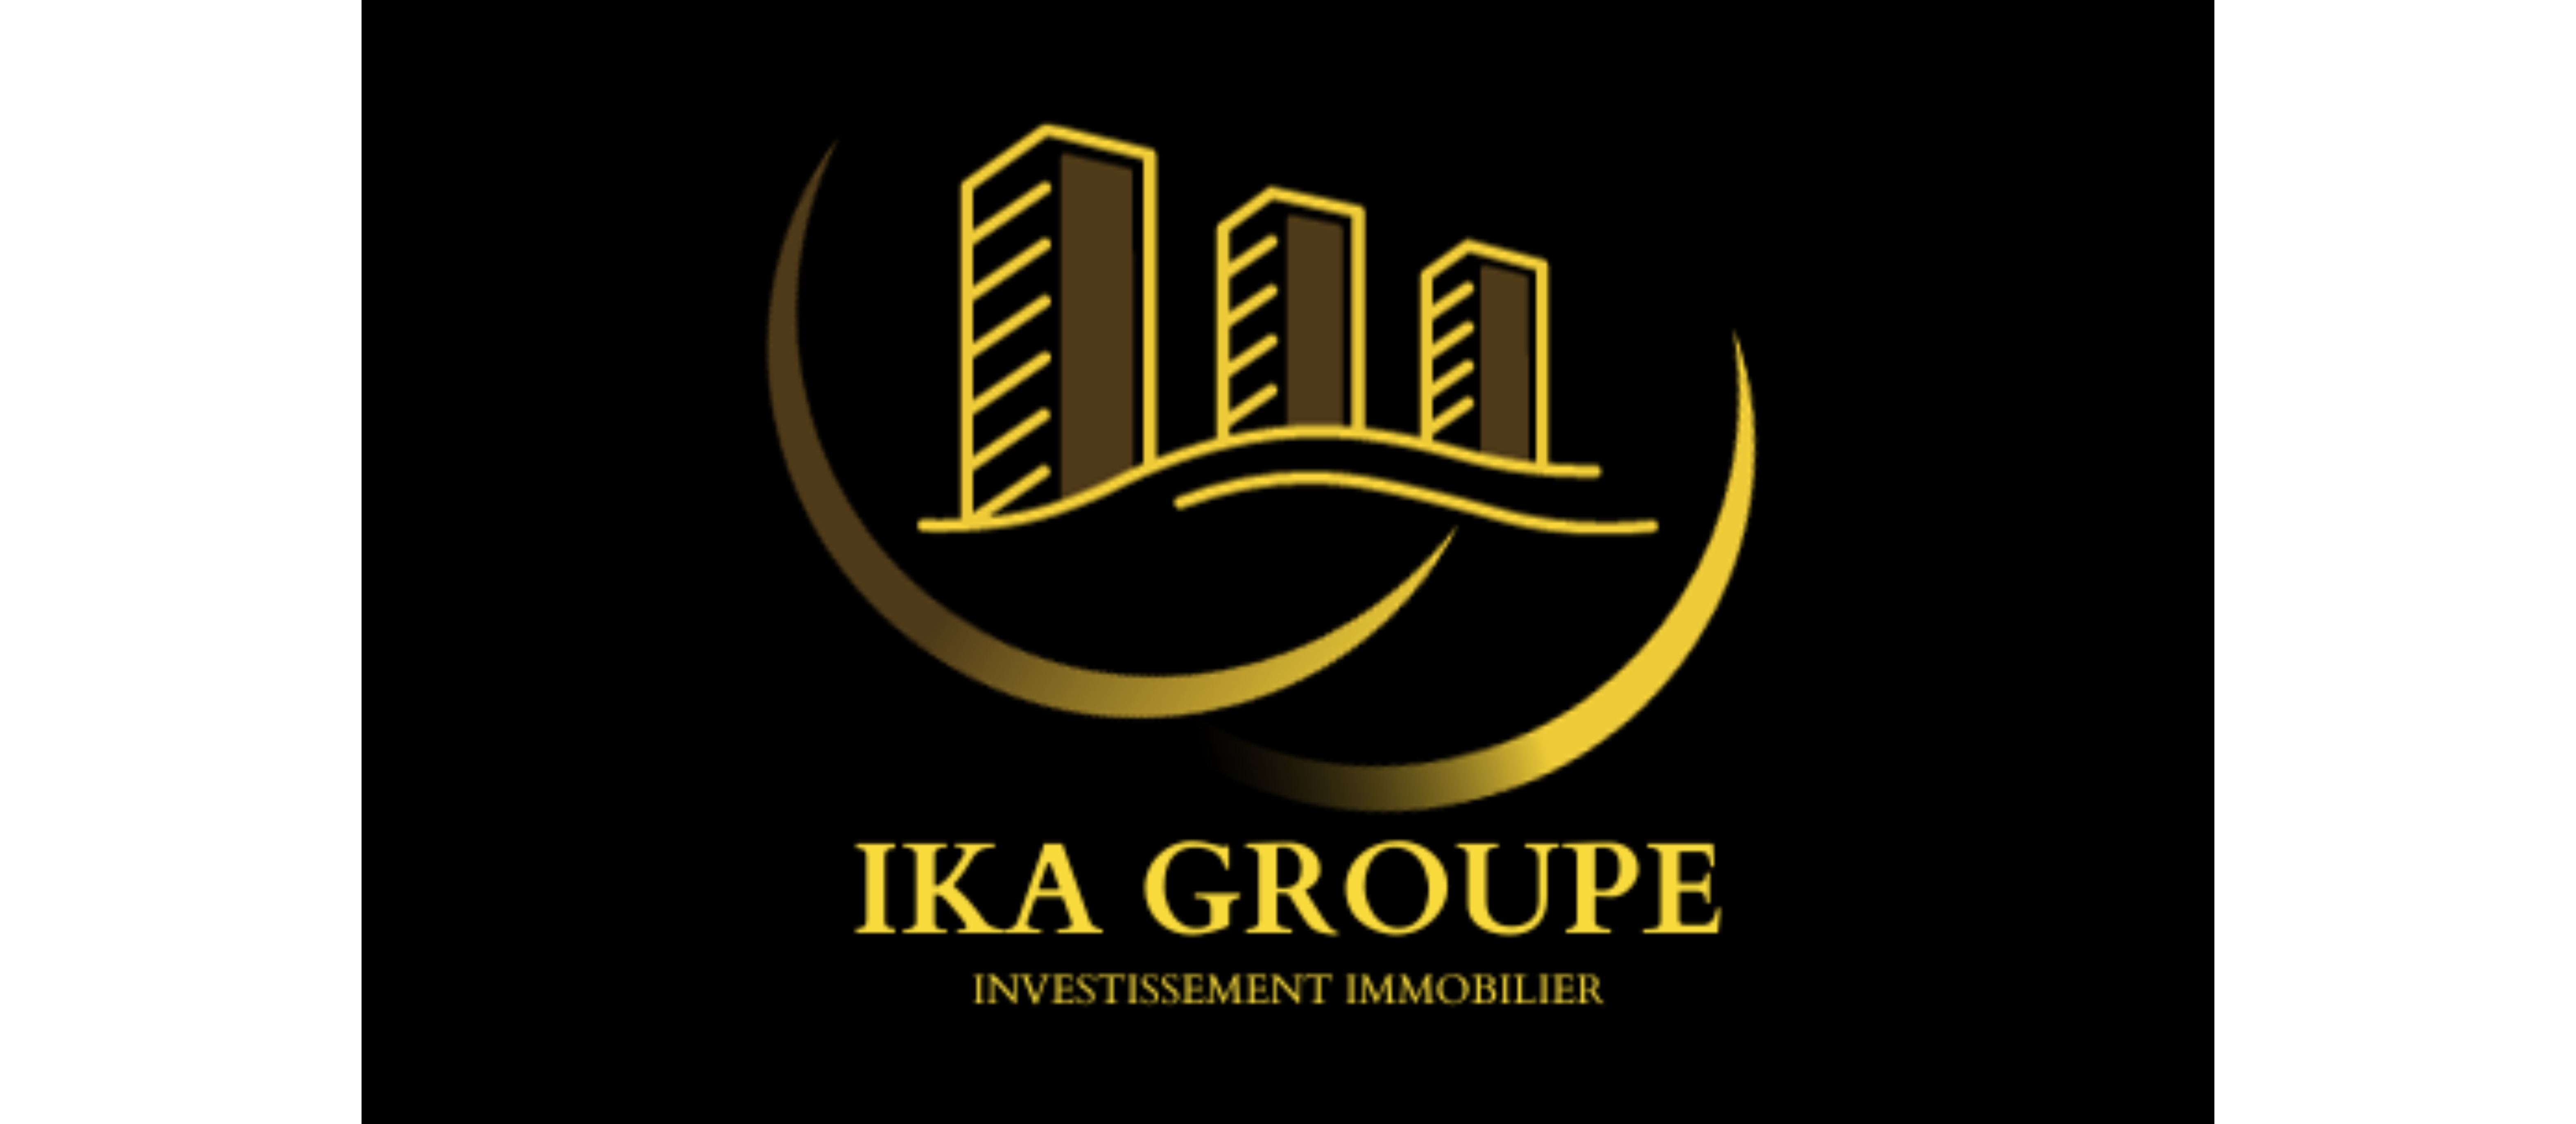 IKA Groupe